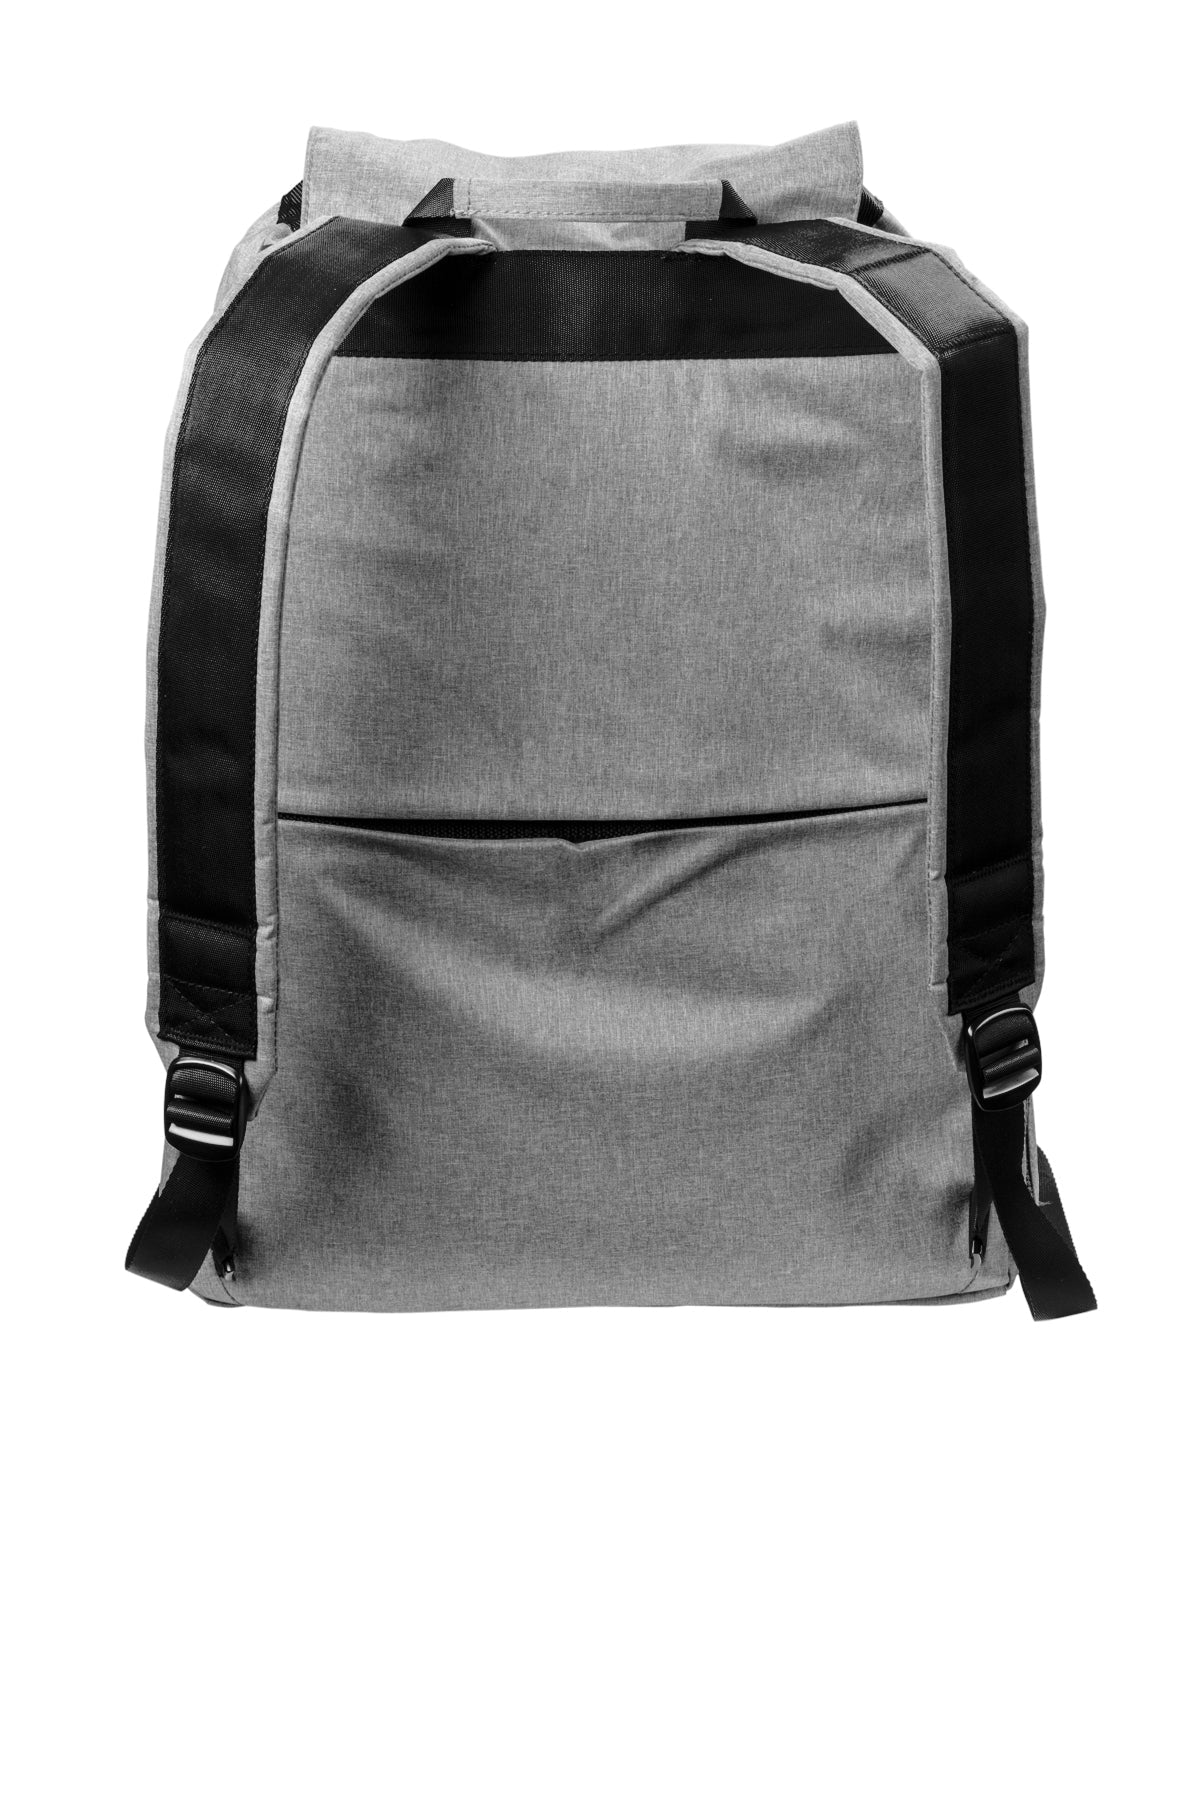 OGIO Evolution Customzied Backpacks, Heather Grey